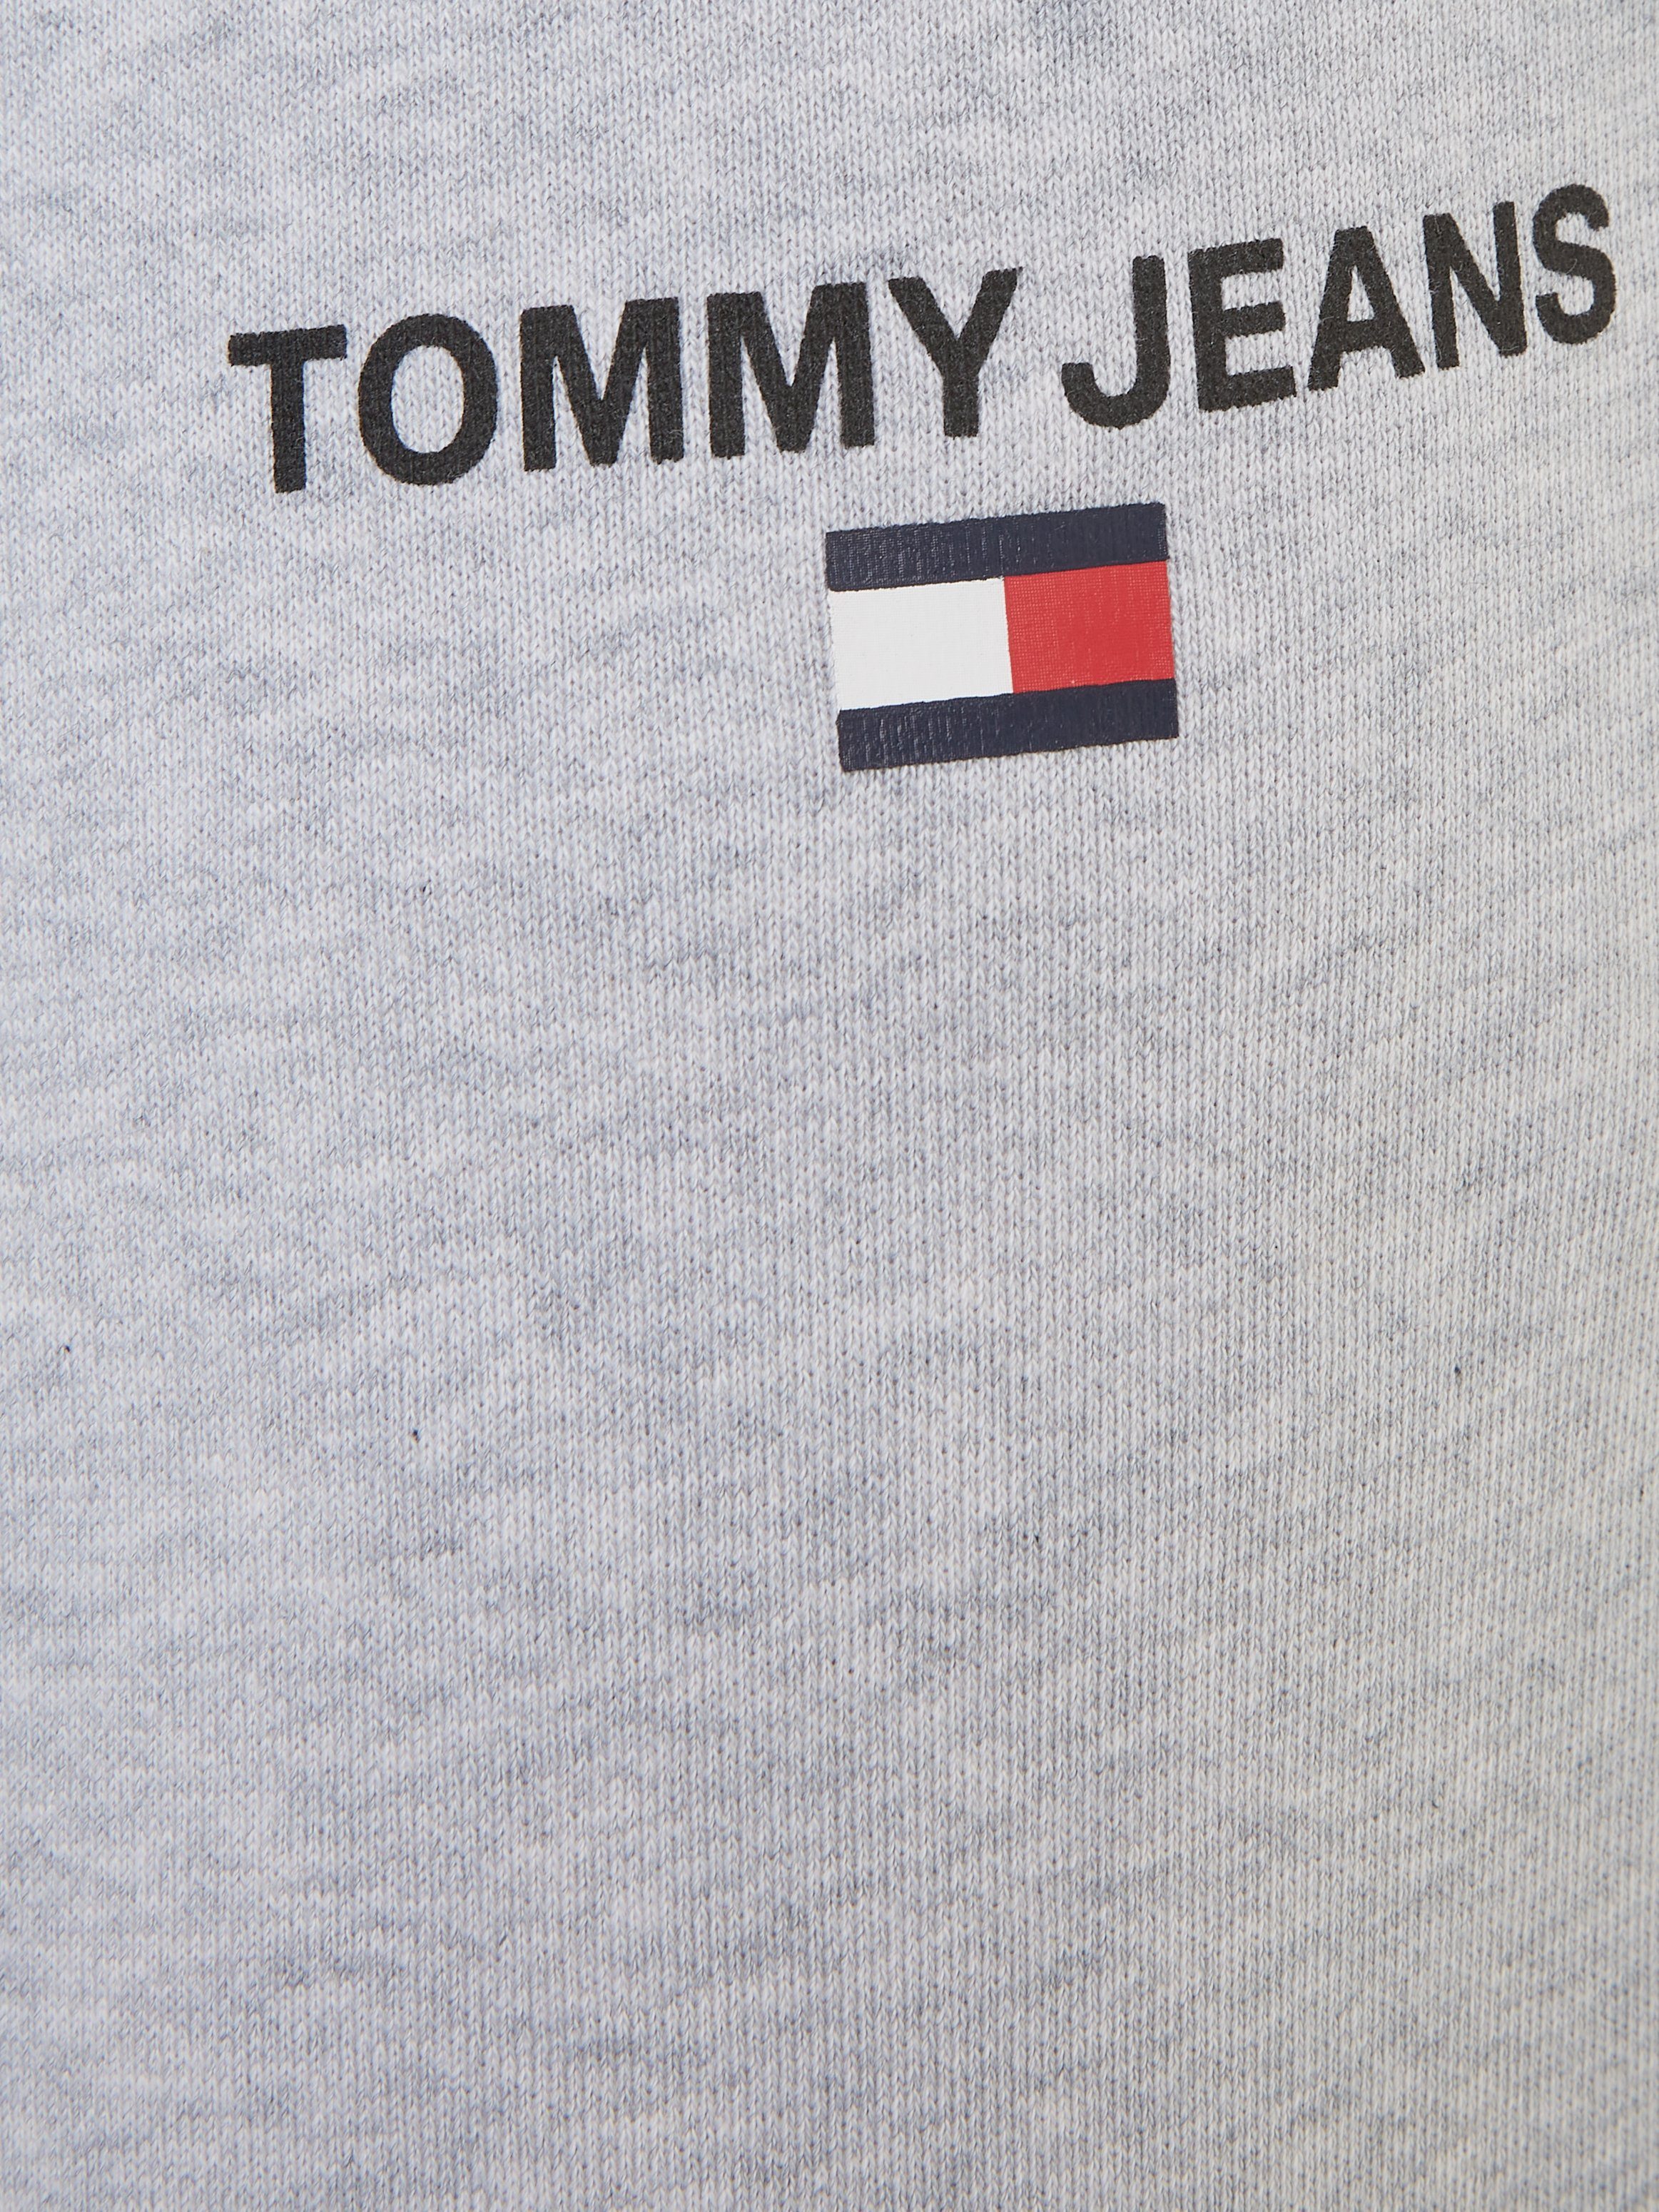 ENTRY Htr TJM Tommy Jeans REG Silver Grey JOGGER Sweathose GRAPHIC